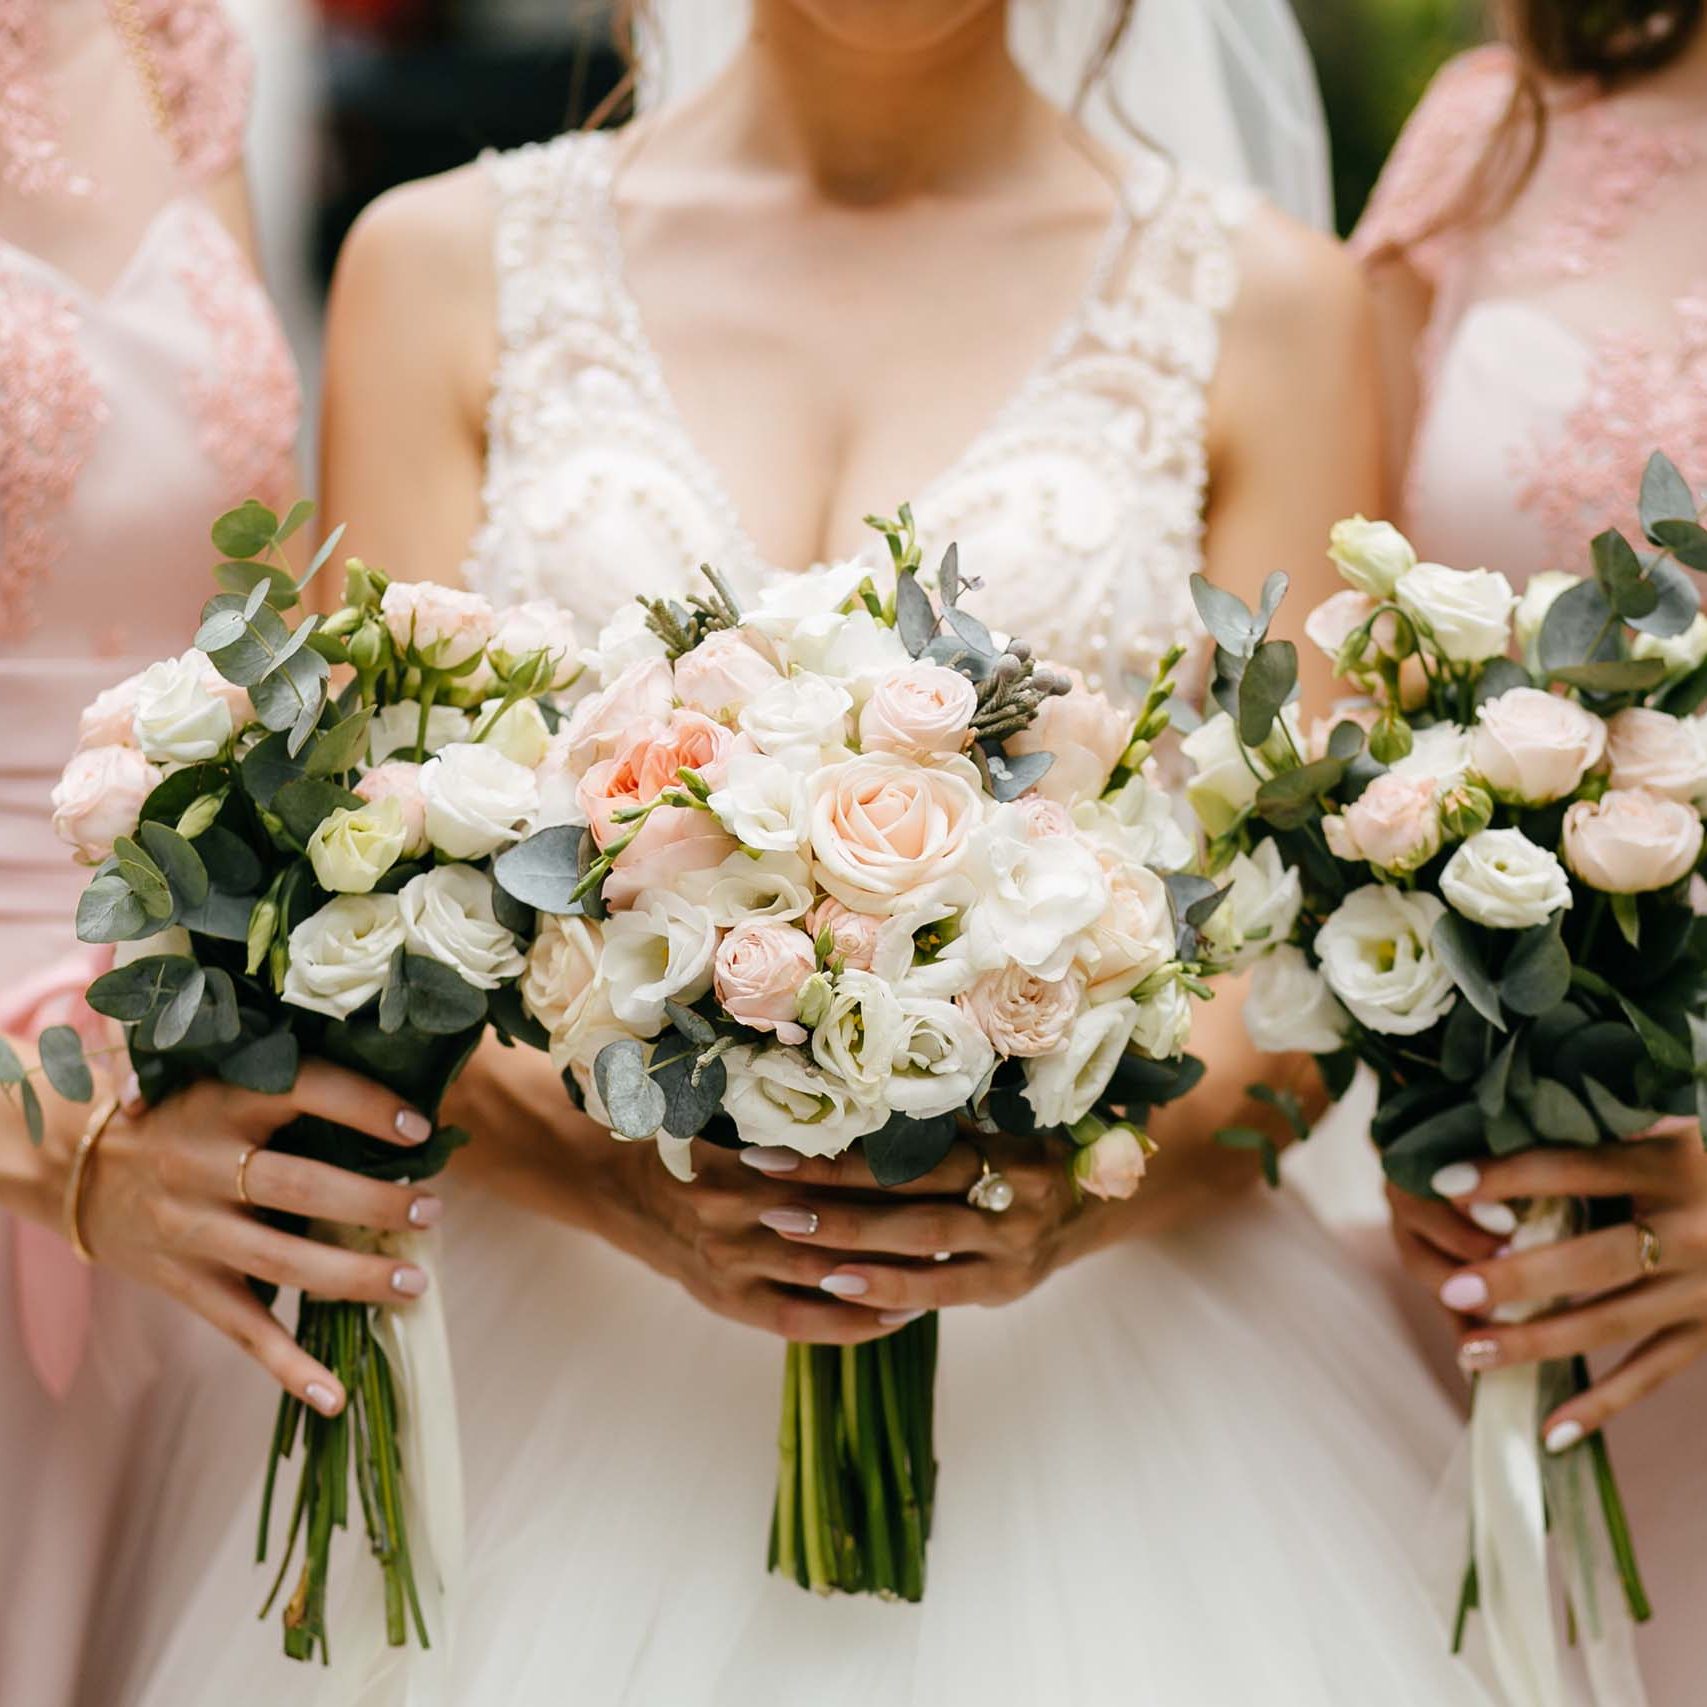 wedding-flowers-bride-bridesmaids-holding-their-bouquets-wedding-day